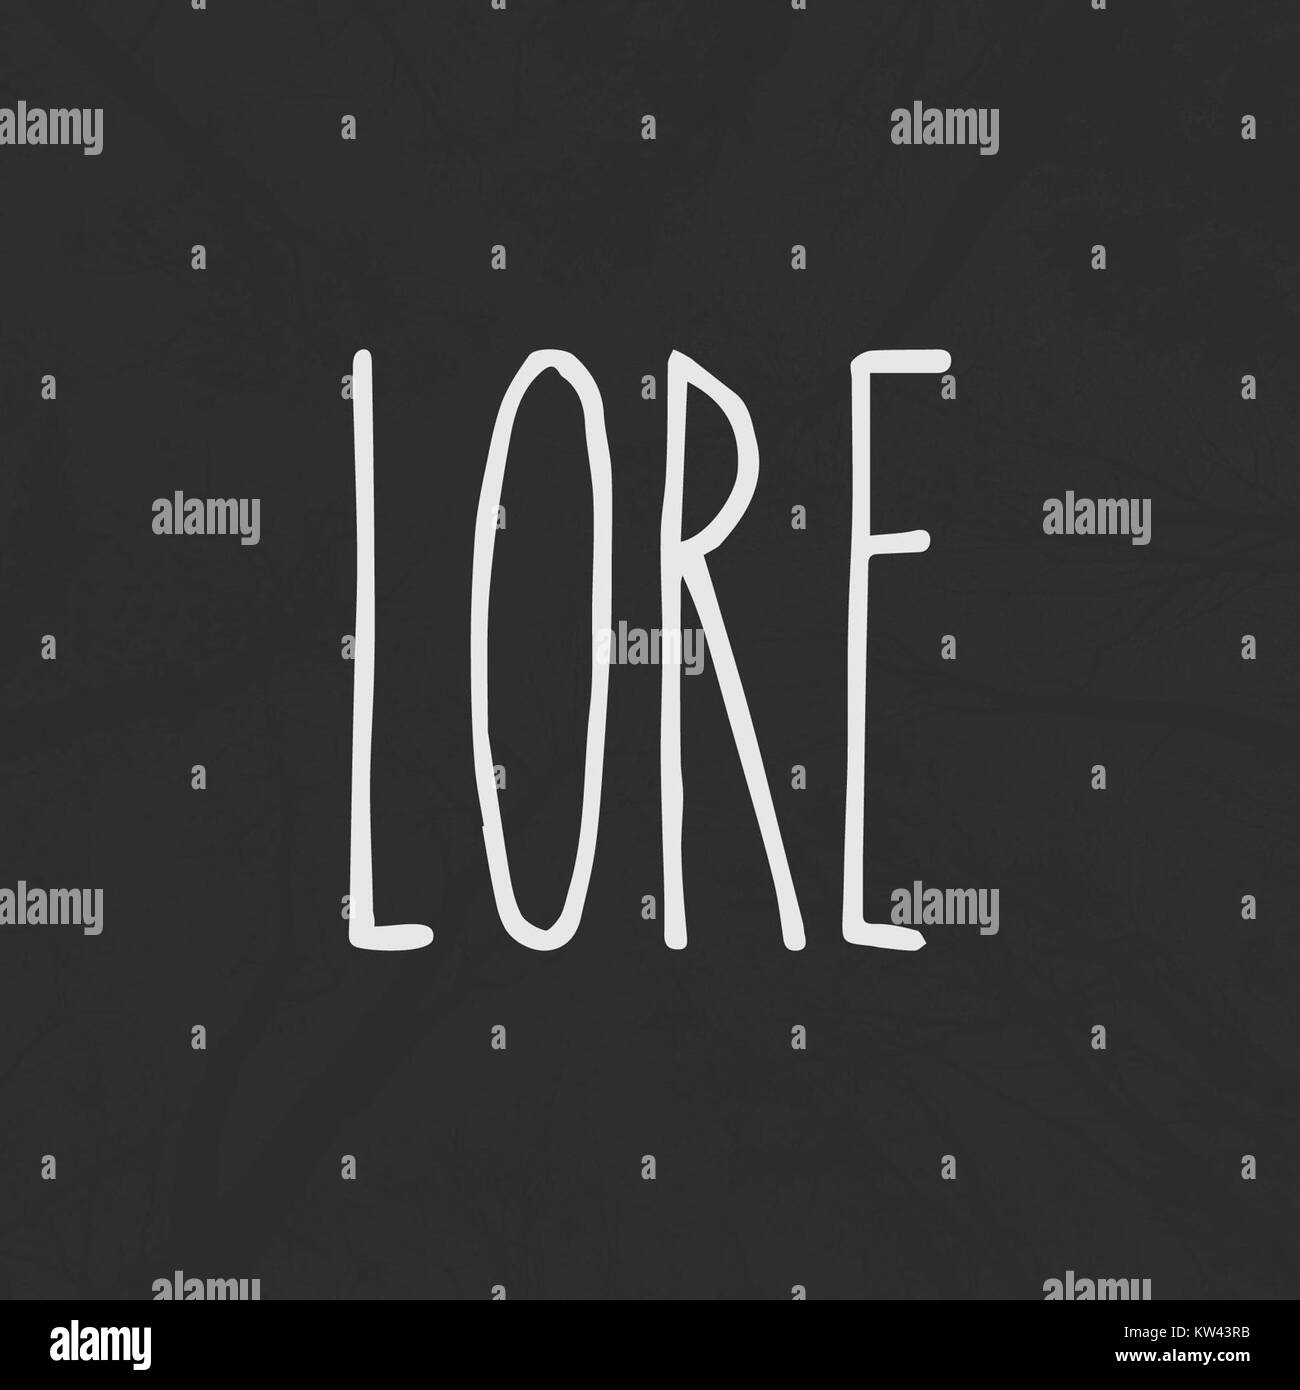 Lore Podcast logo Stock Photo